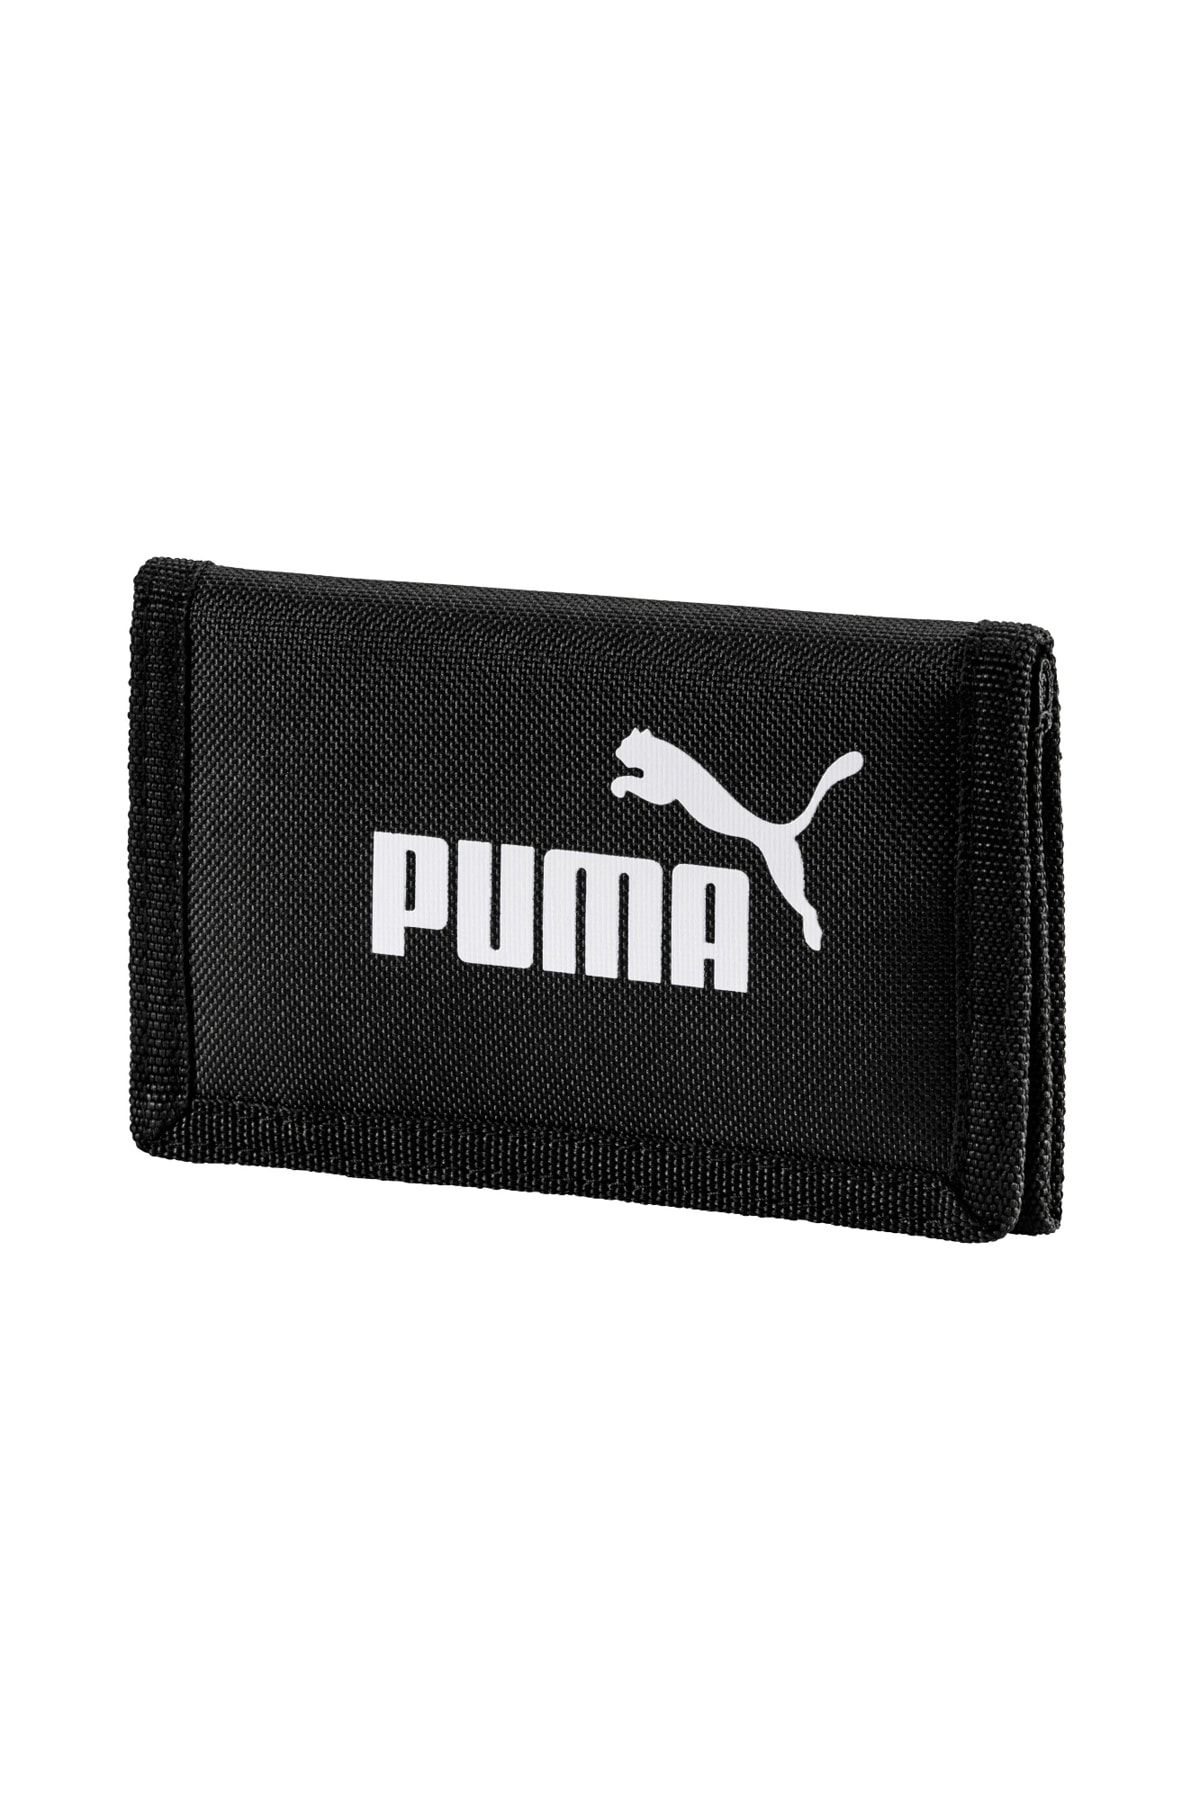 کیف پول پوما مشکی Puma